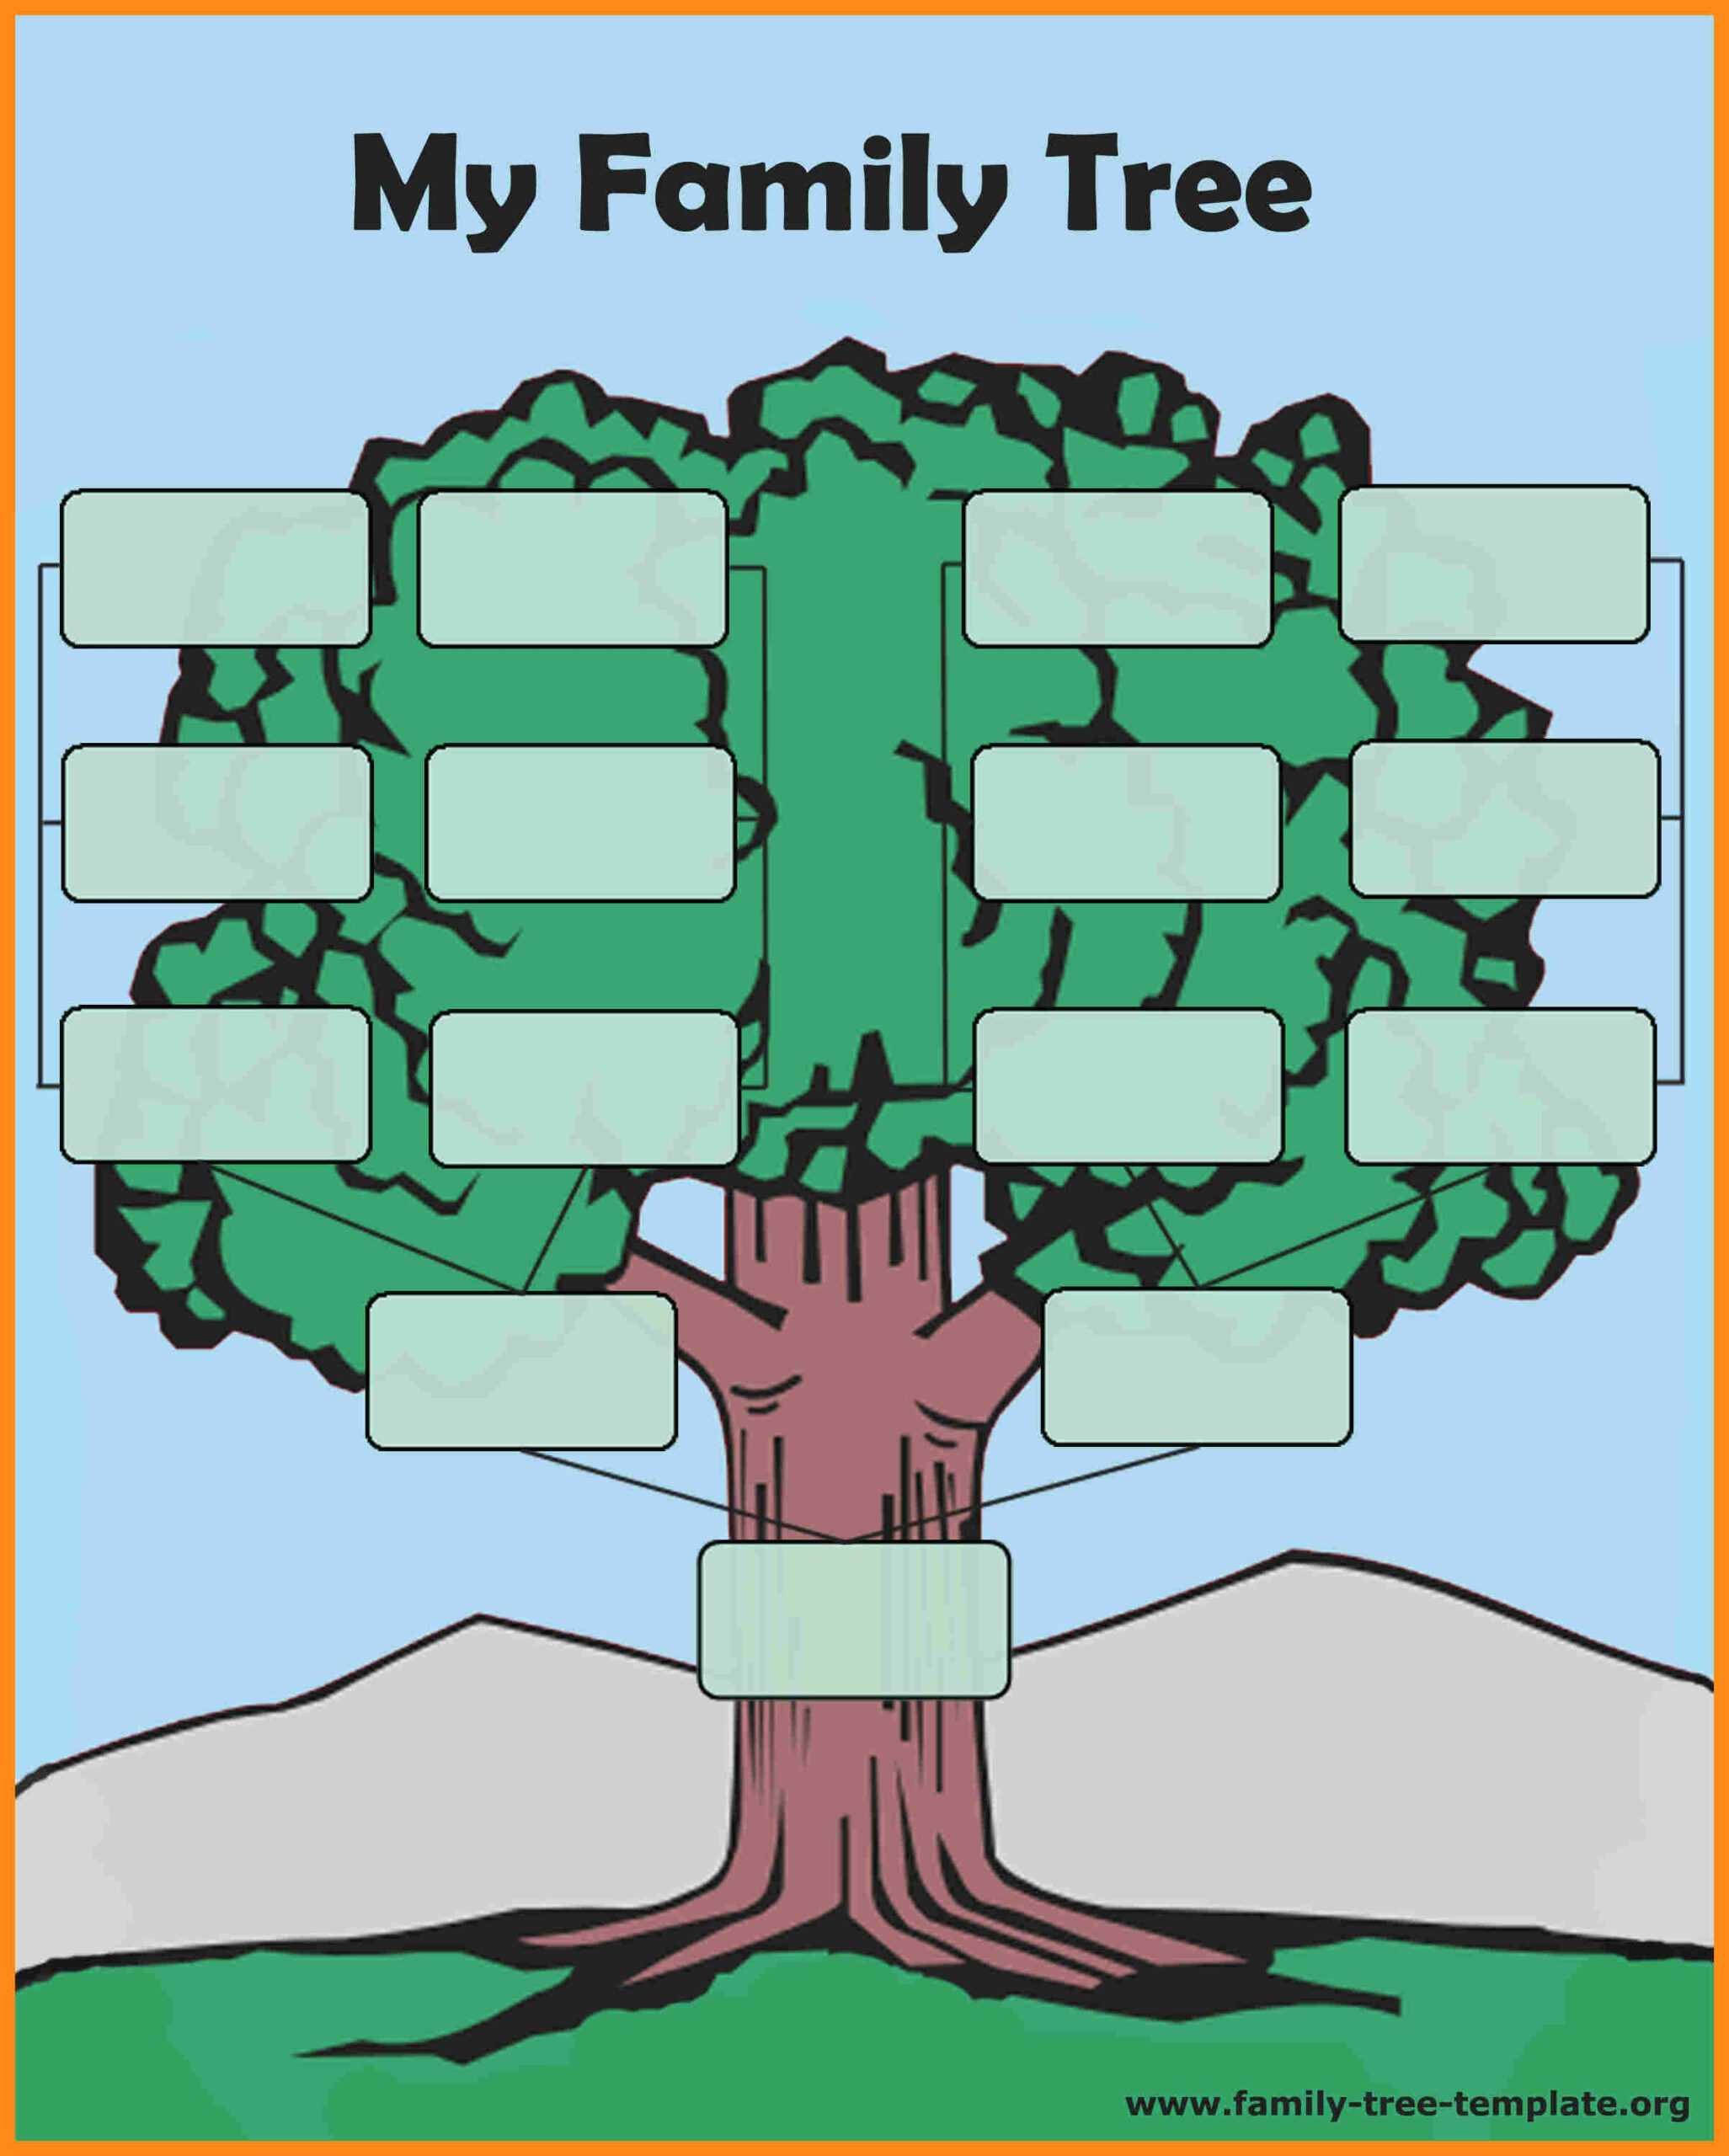 Clipart Family Tree Maker Regarding Fill In The Blank Family Tree Template